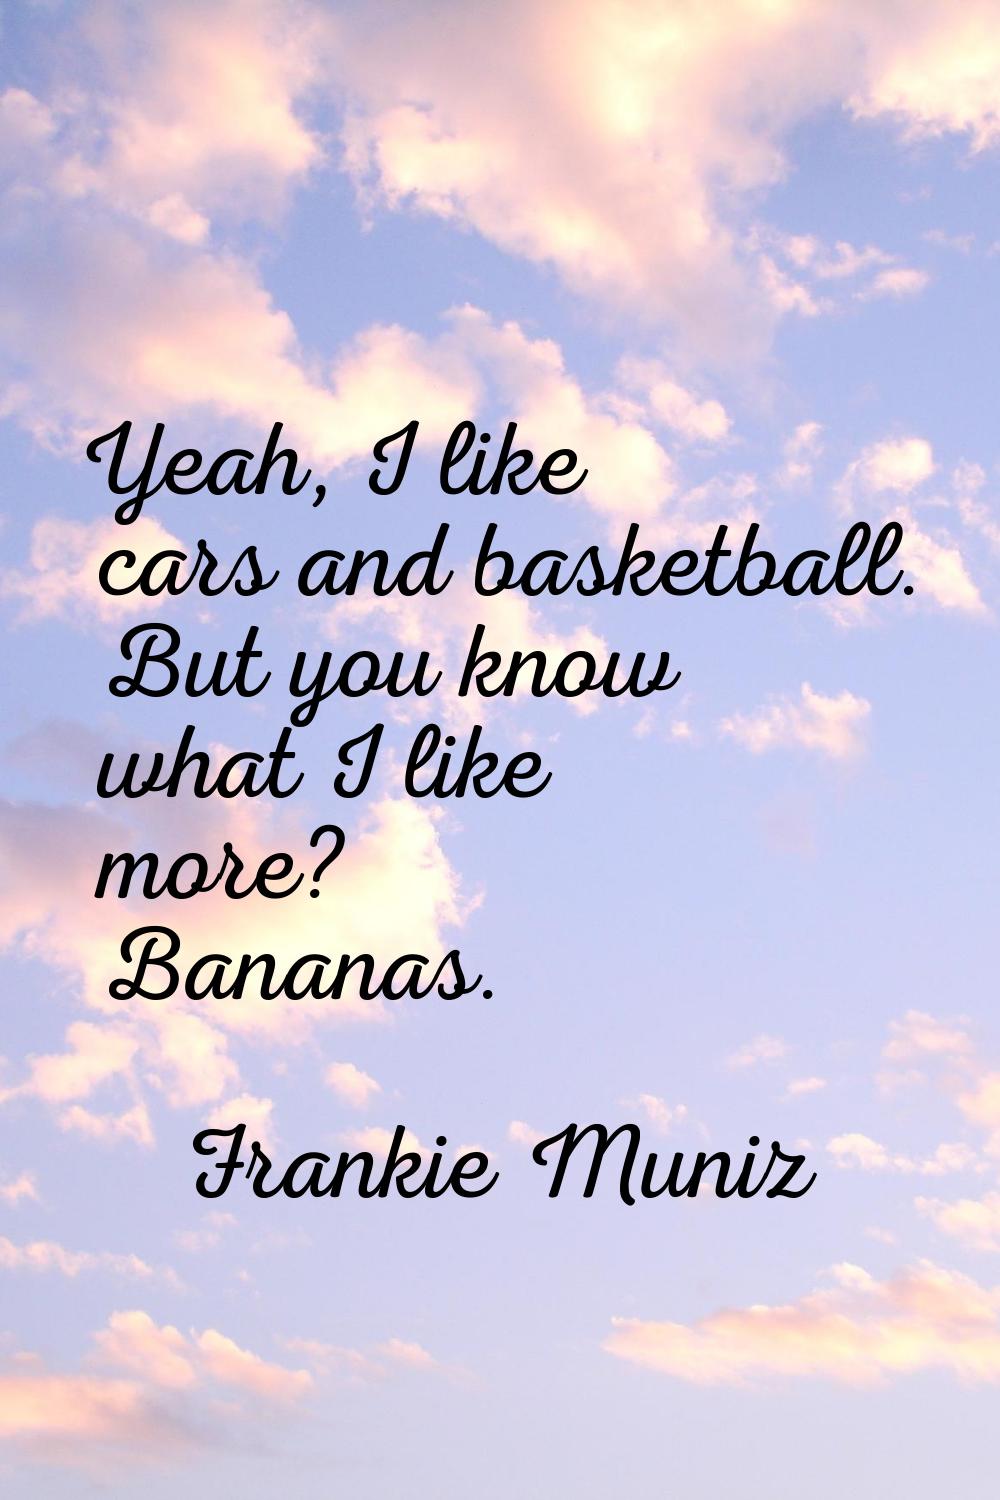 Yeah, I like cars and basketball. But you know what I like more? Bananas.